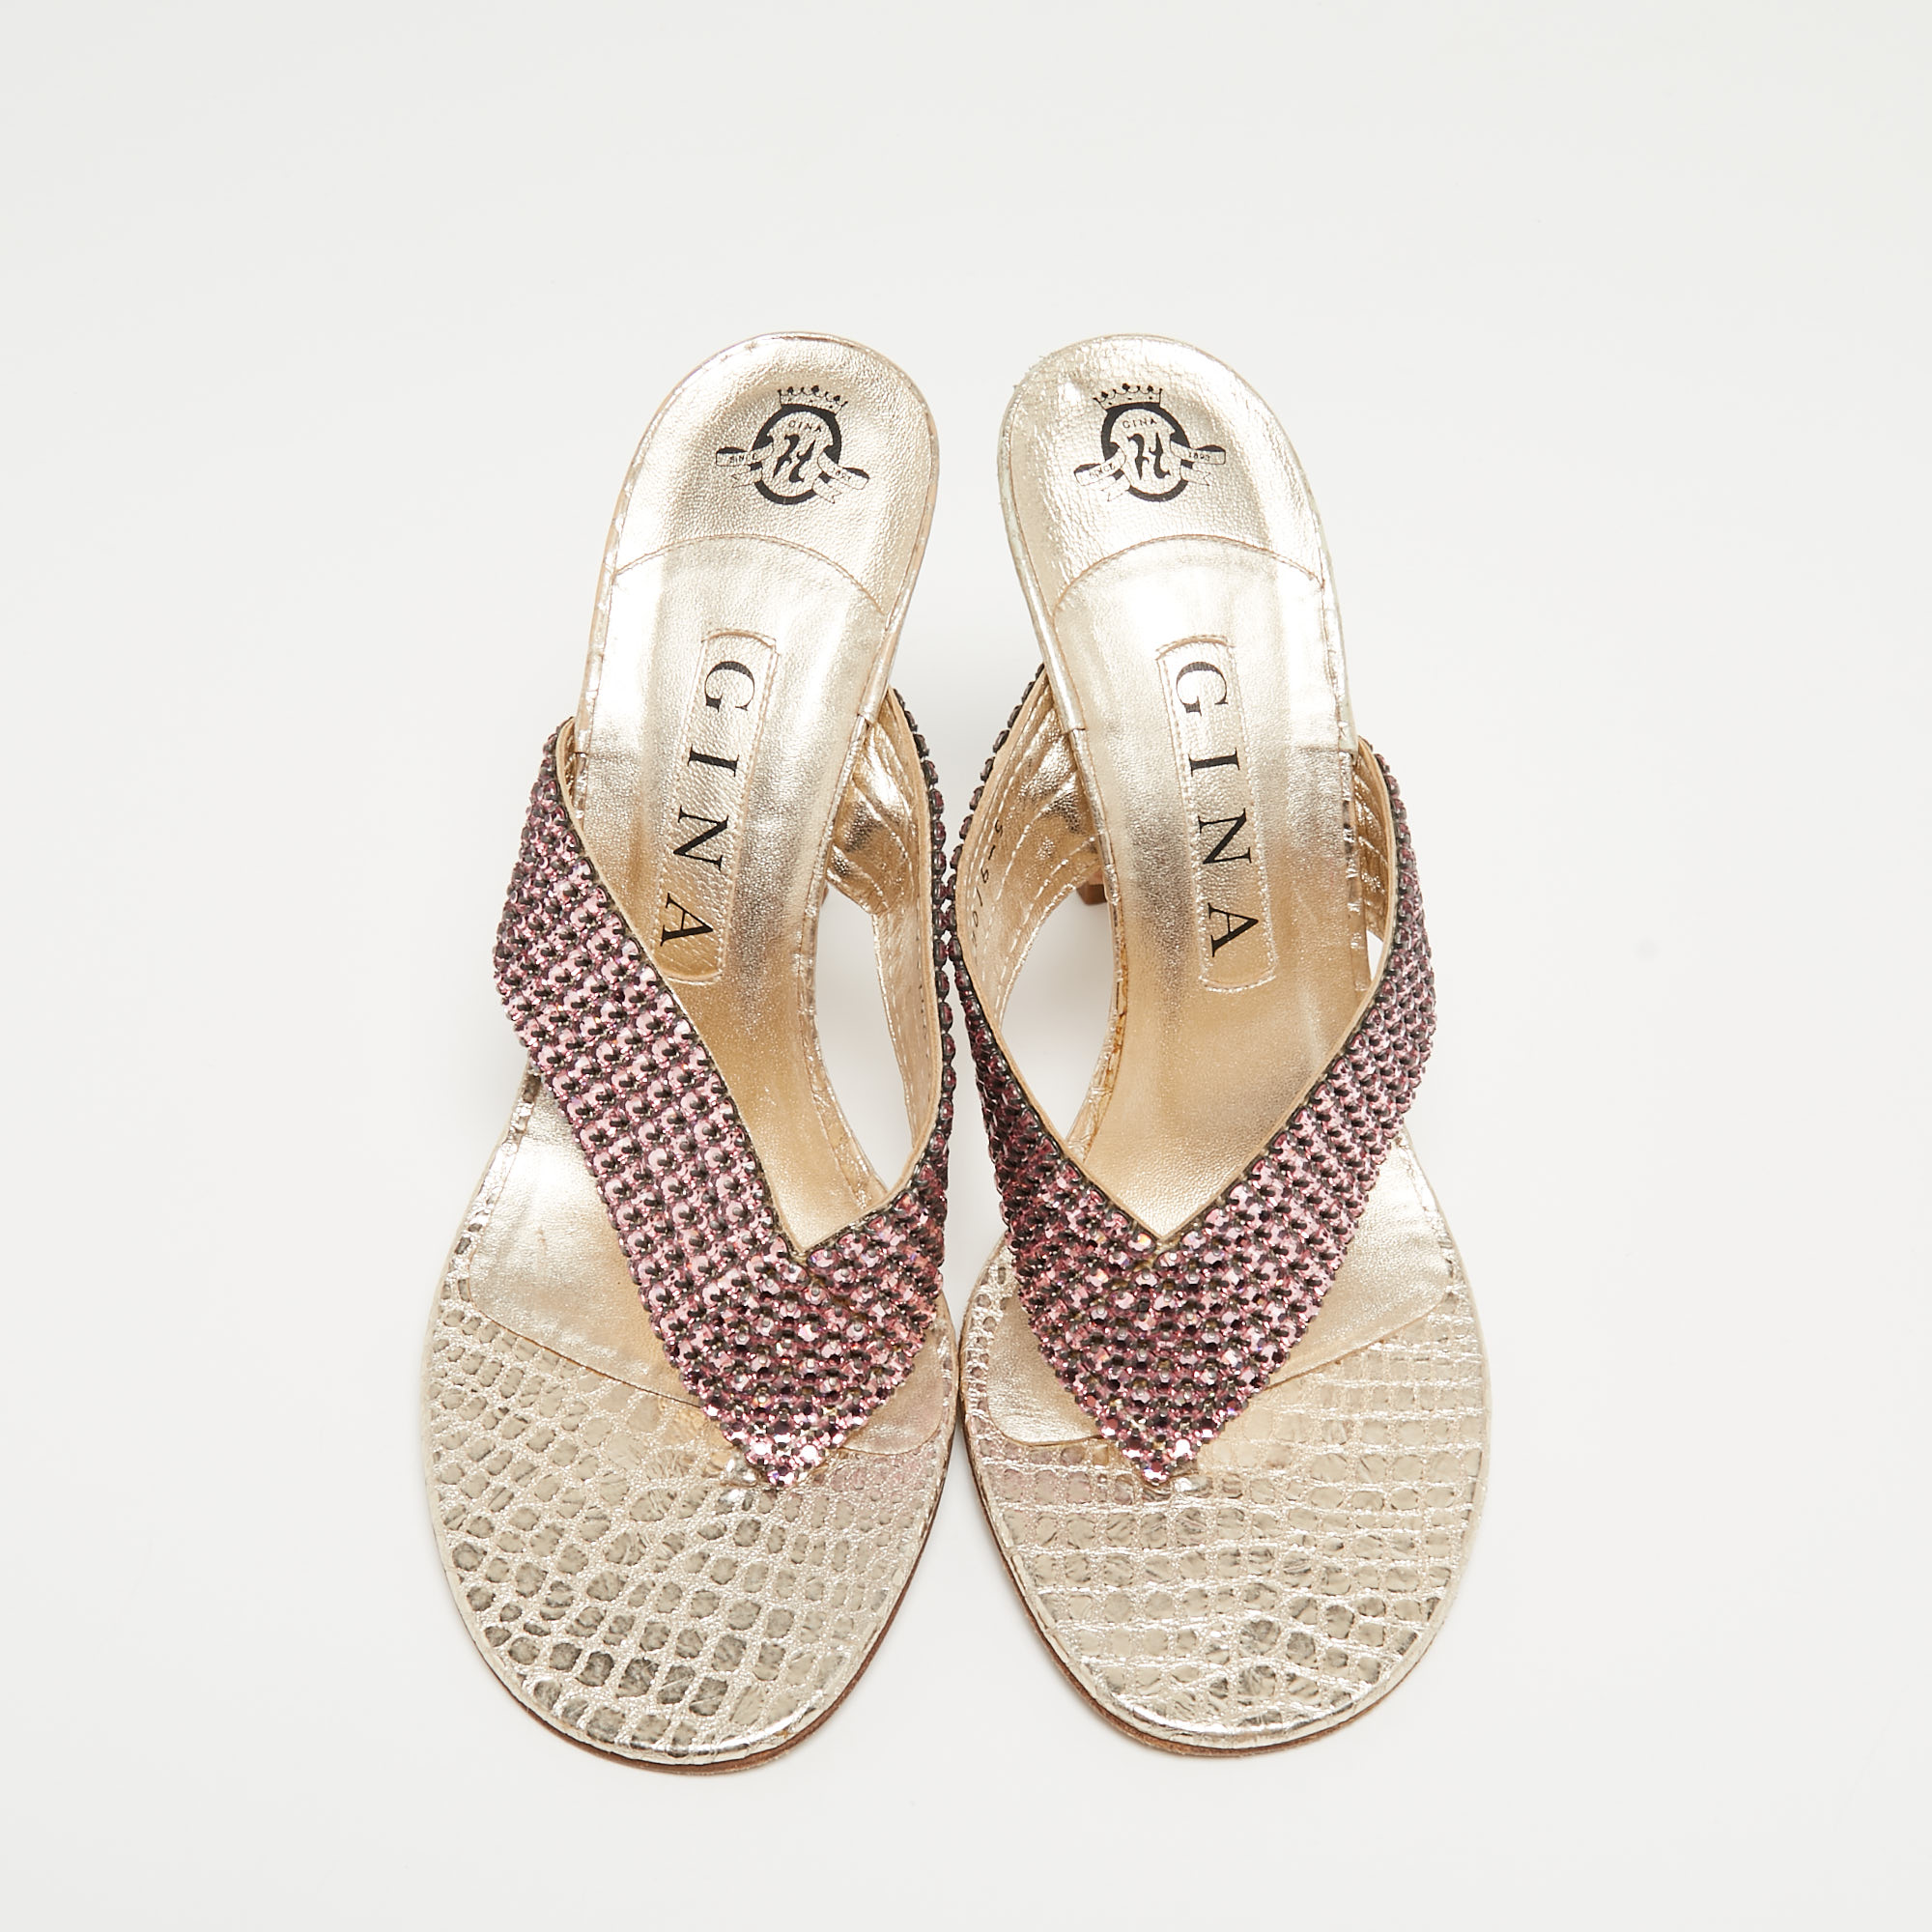 Gina Gold Leather Crystal Embellished Thong Sandals Size 38